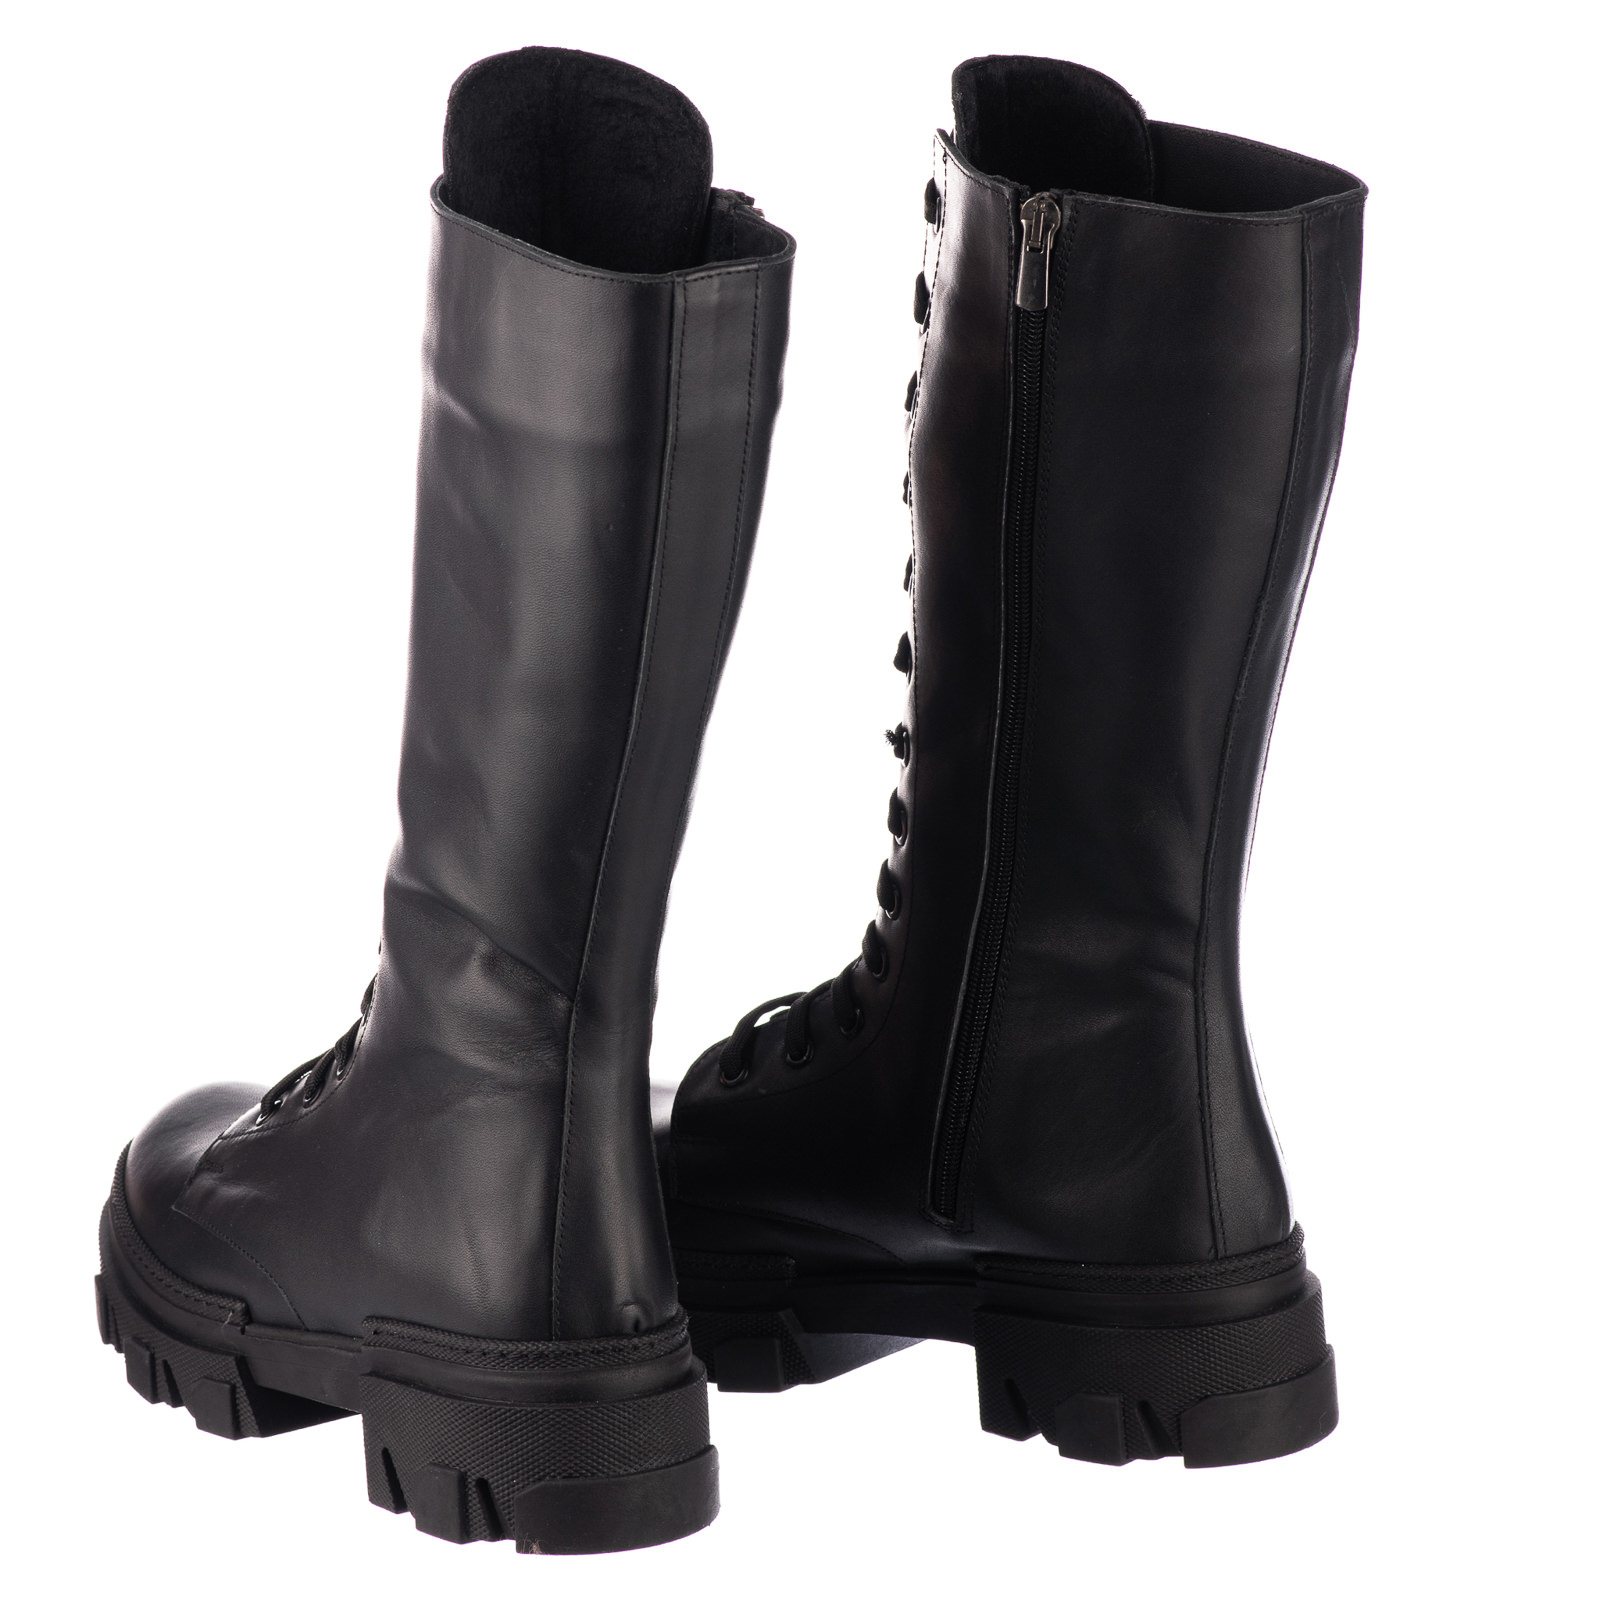 Leather WATERPROOF boots B701 - BLACK